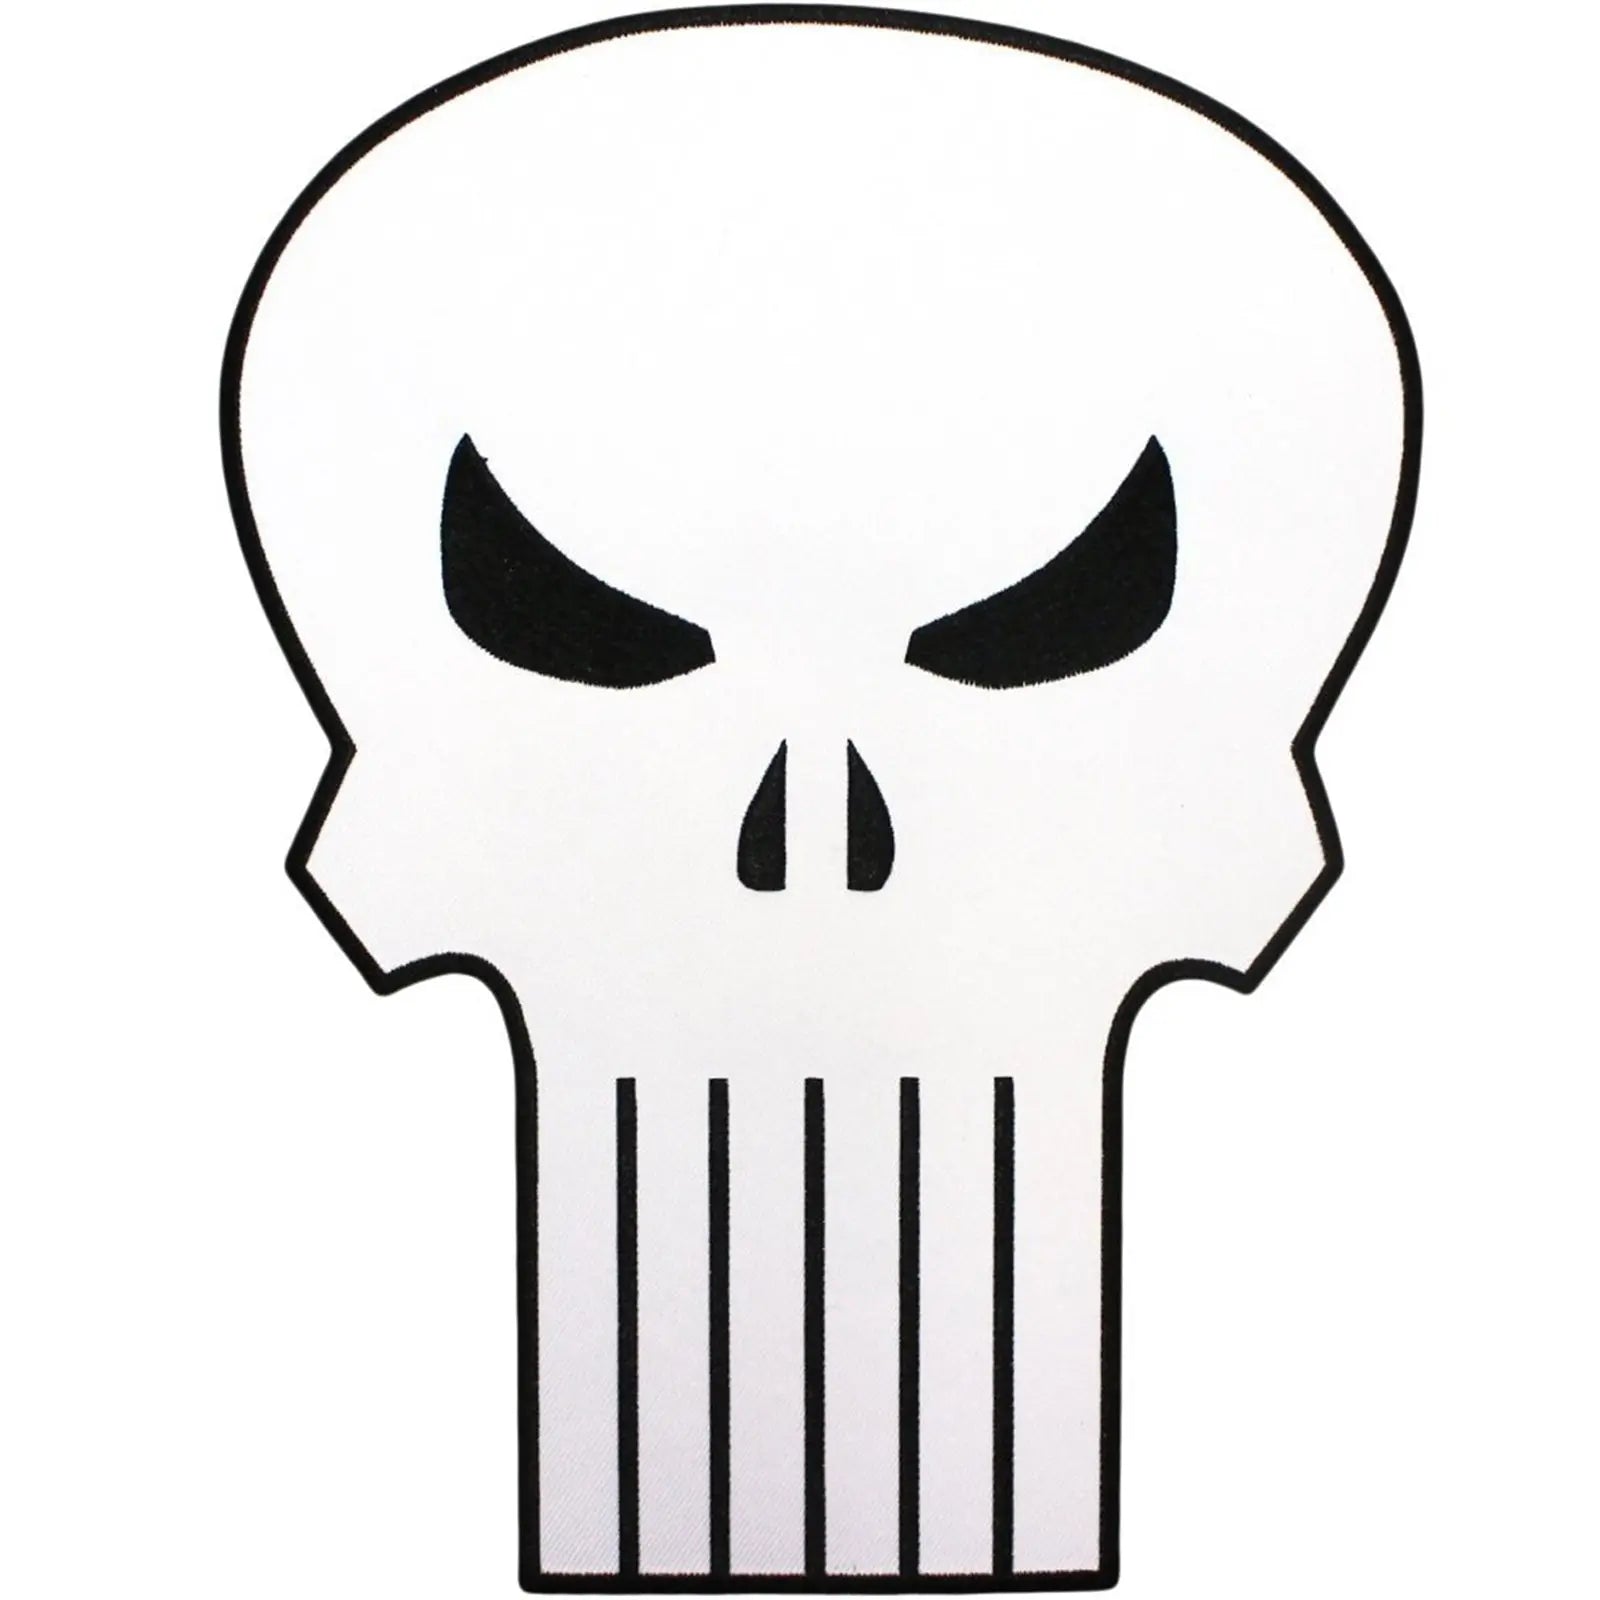 Punisher Logo Patch